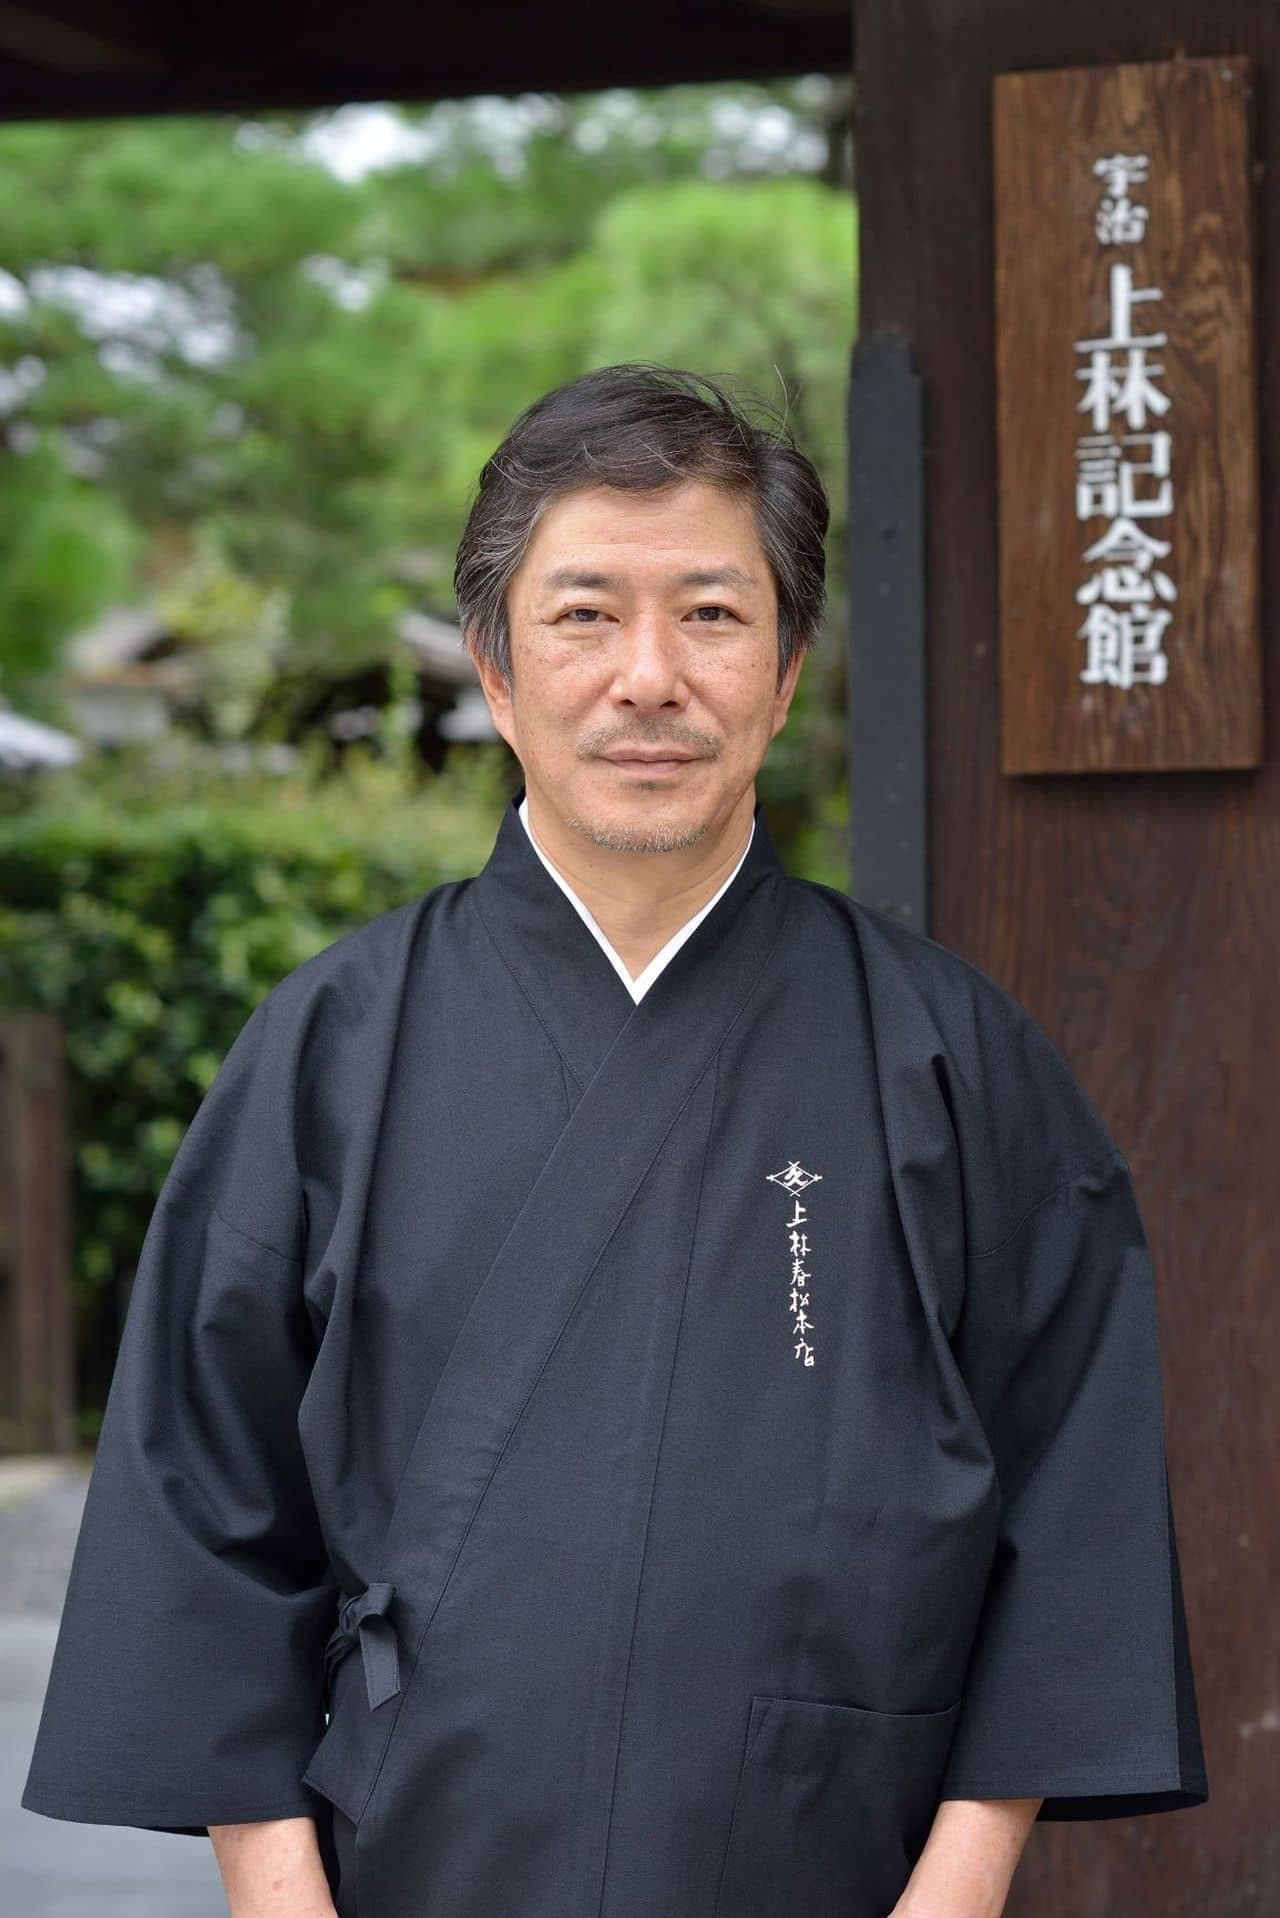 Harumatsu Kambayashi, the 15th generation